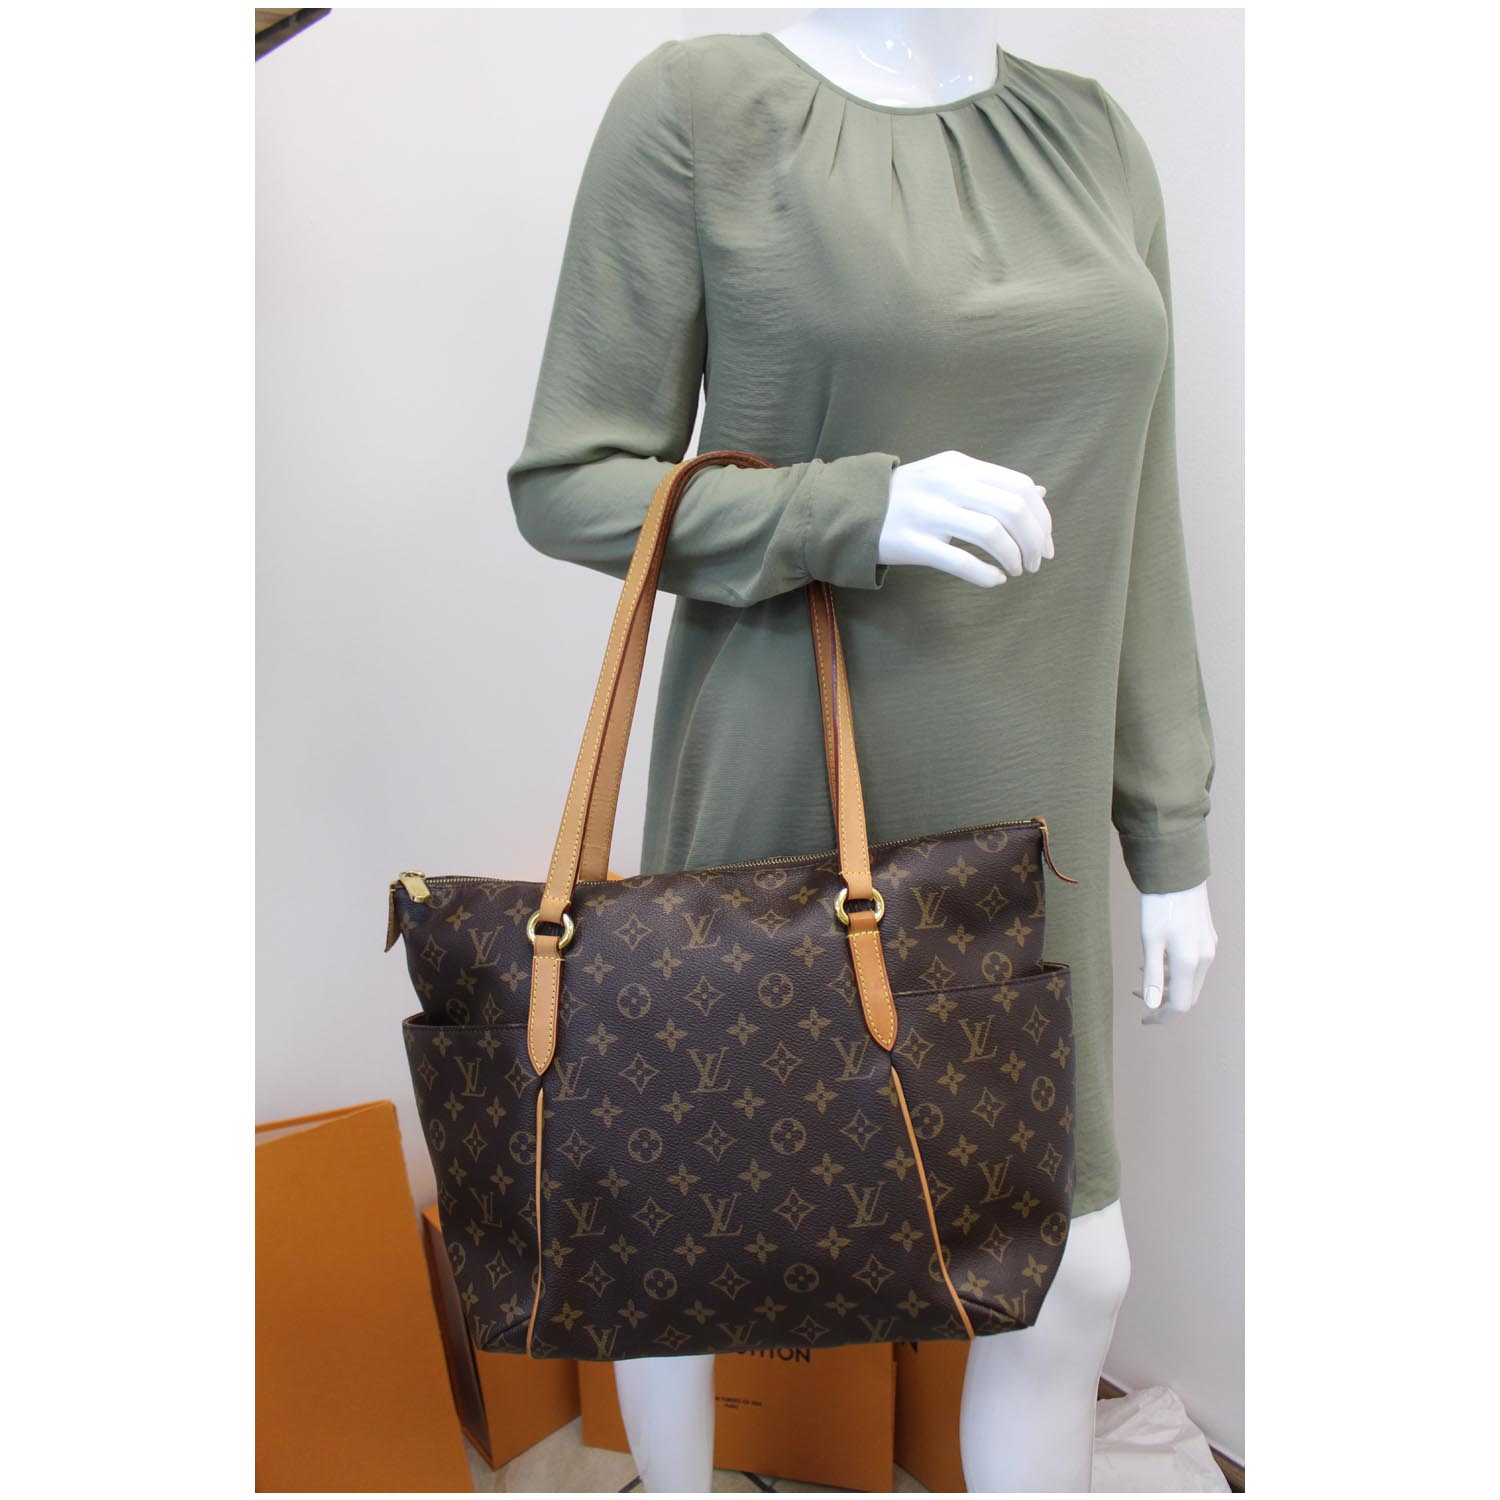 Authentic Louis Vuitton Totally MM Monogram Shoulder bag tote bag